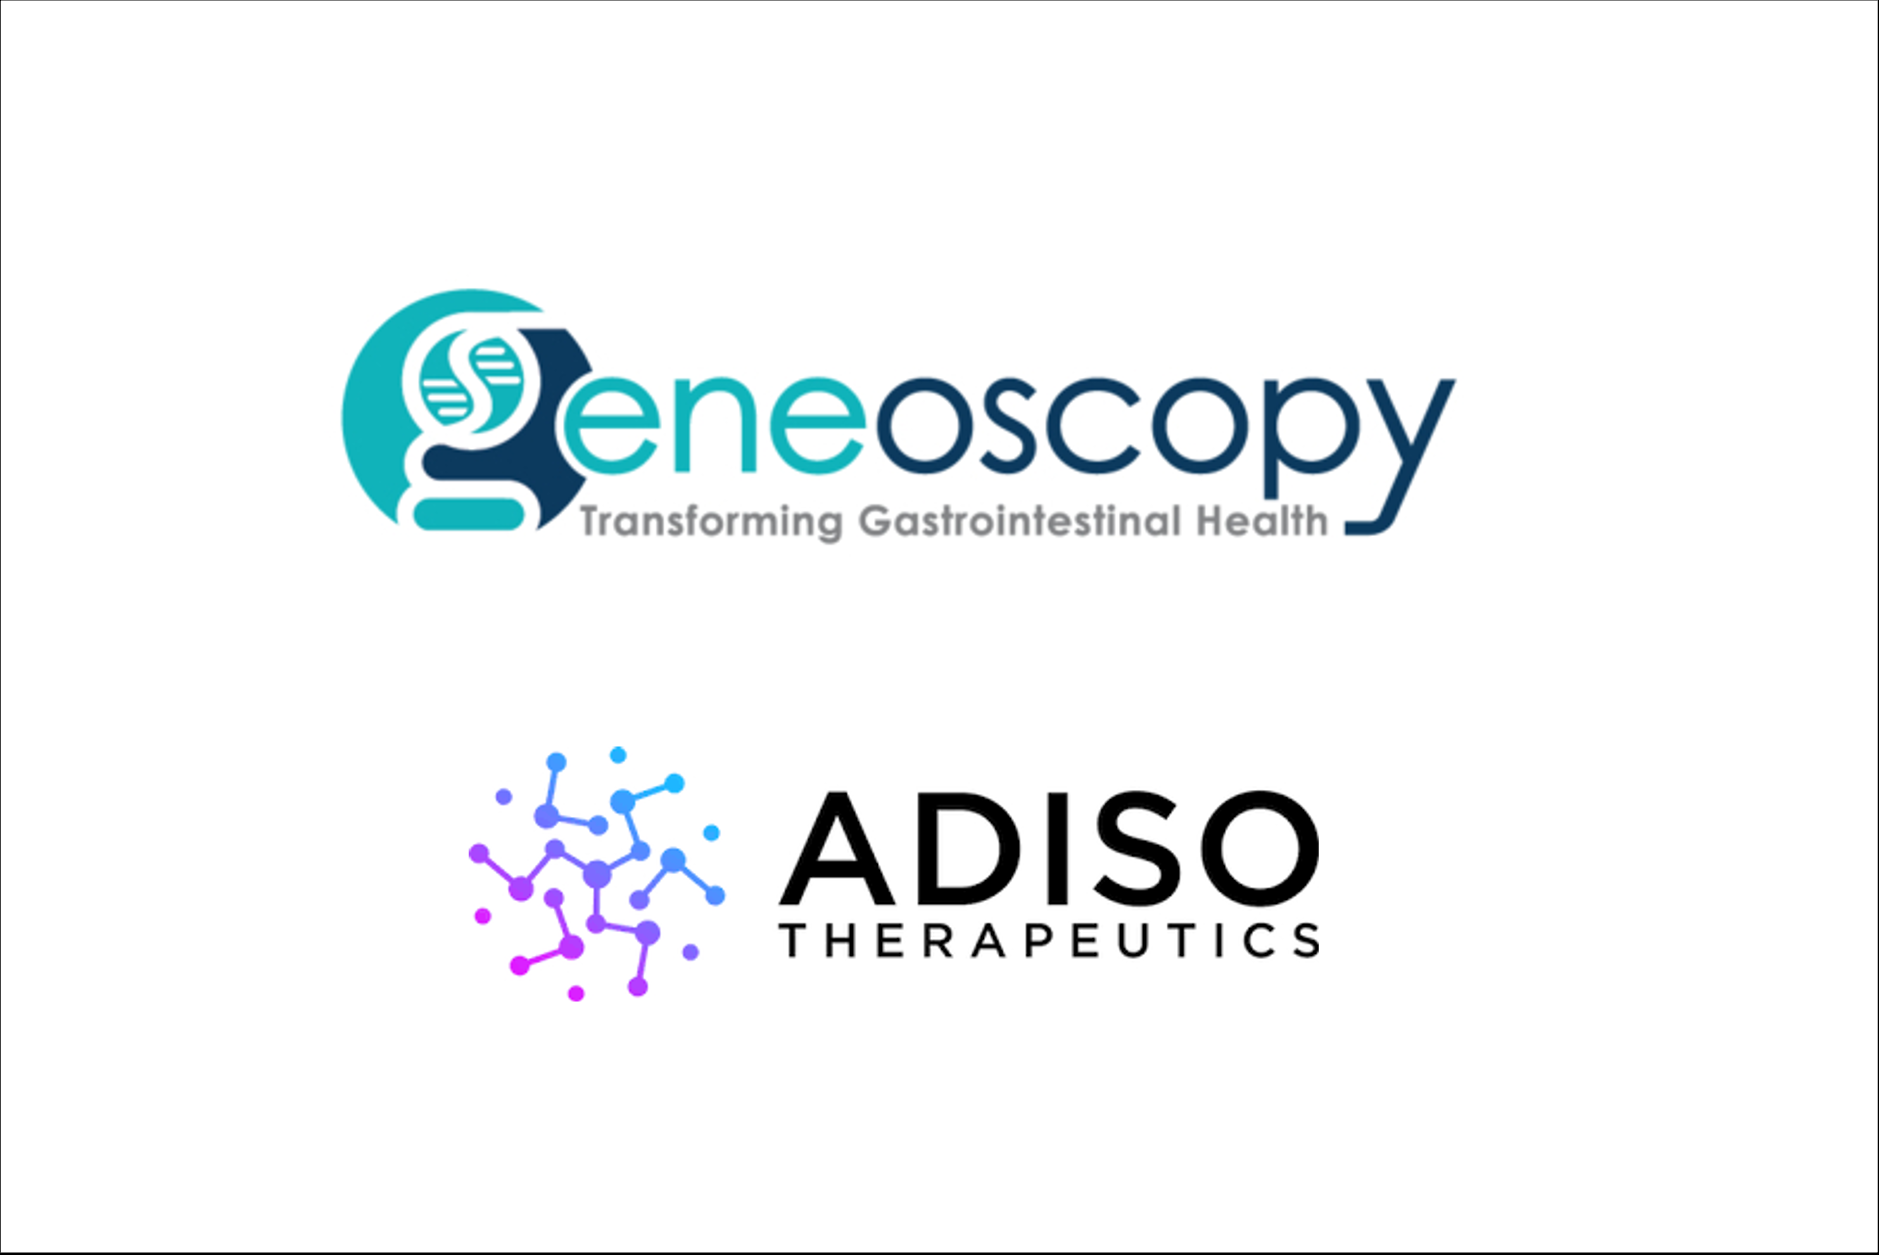 Geneoscopy, Adiso Therapeutics Partner to Advance Inflammatory Bowel Disease Therapy